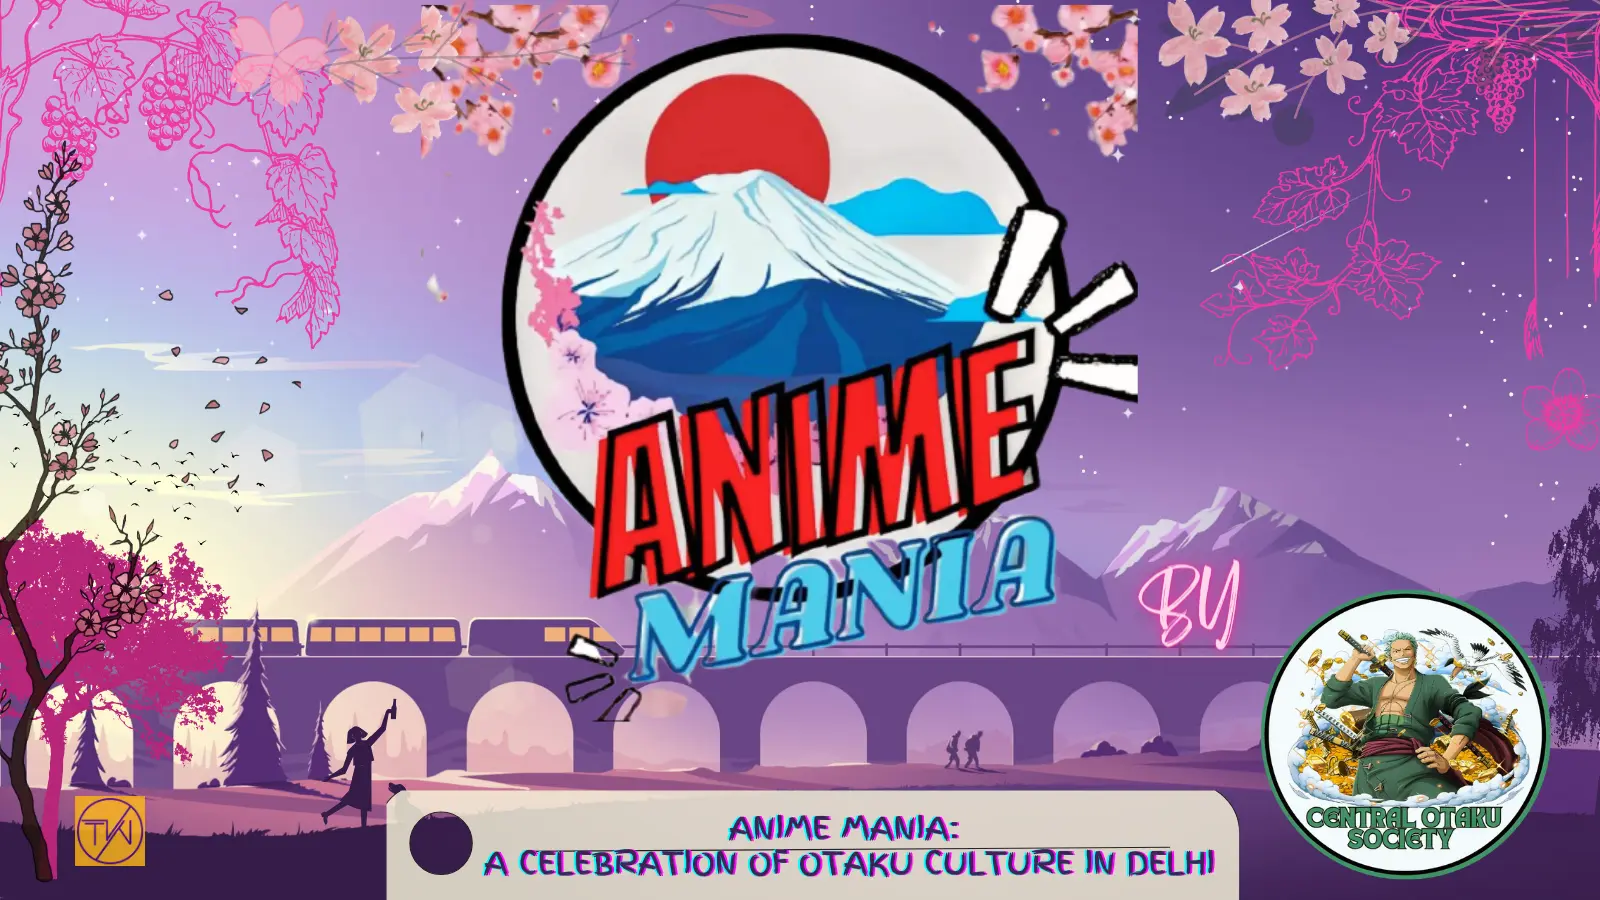 Anime Mania: A Celebration of Otaku Culture in Delhi - That Weird Page